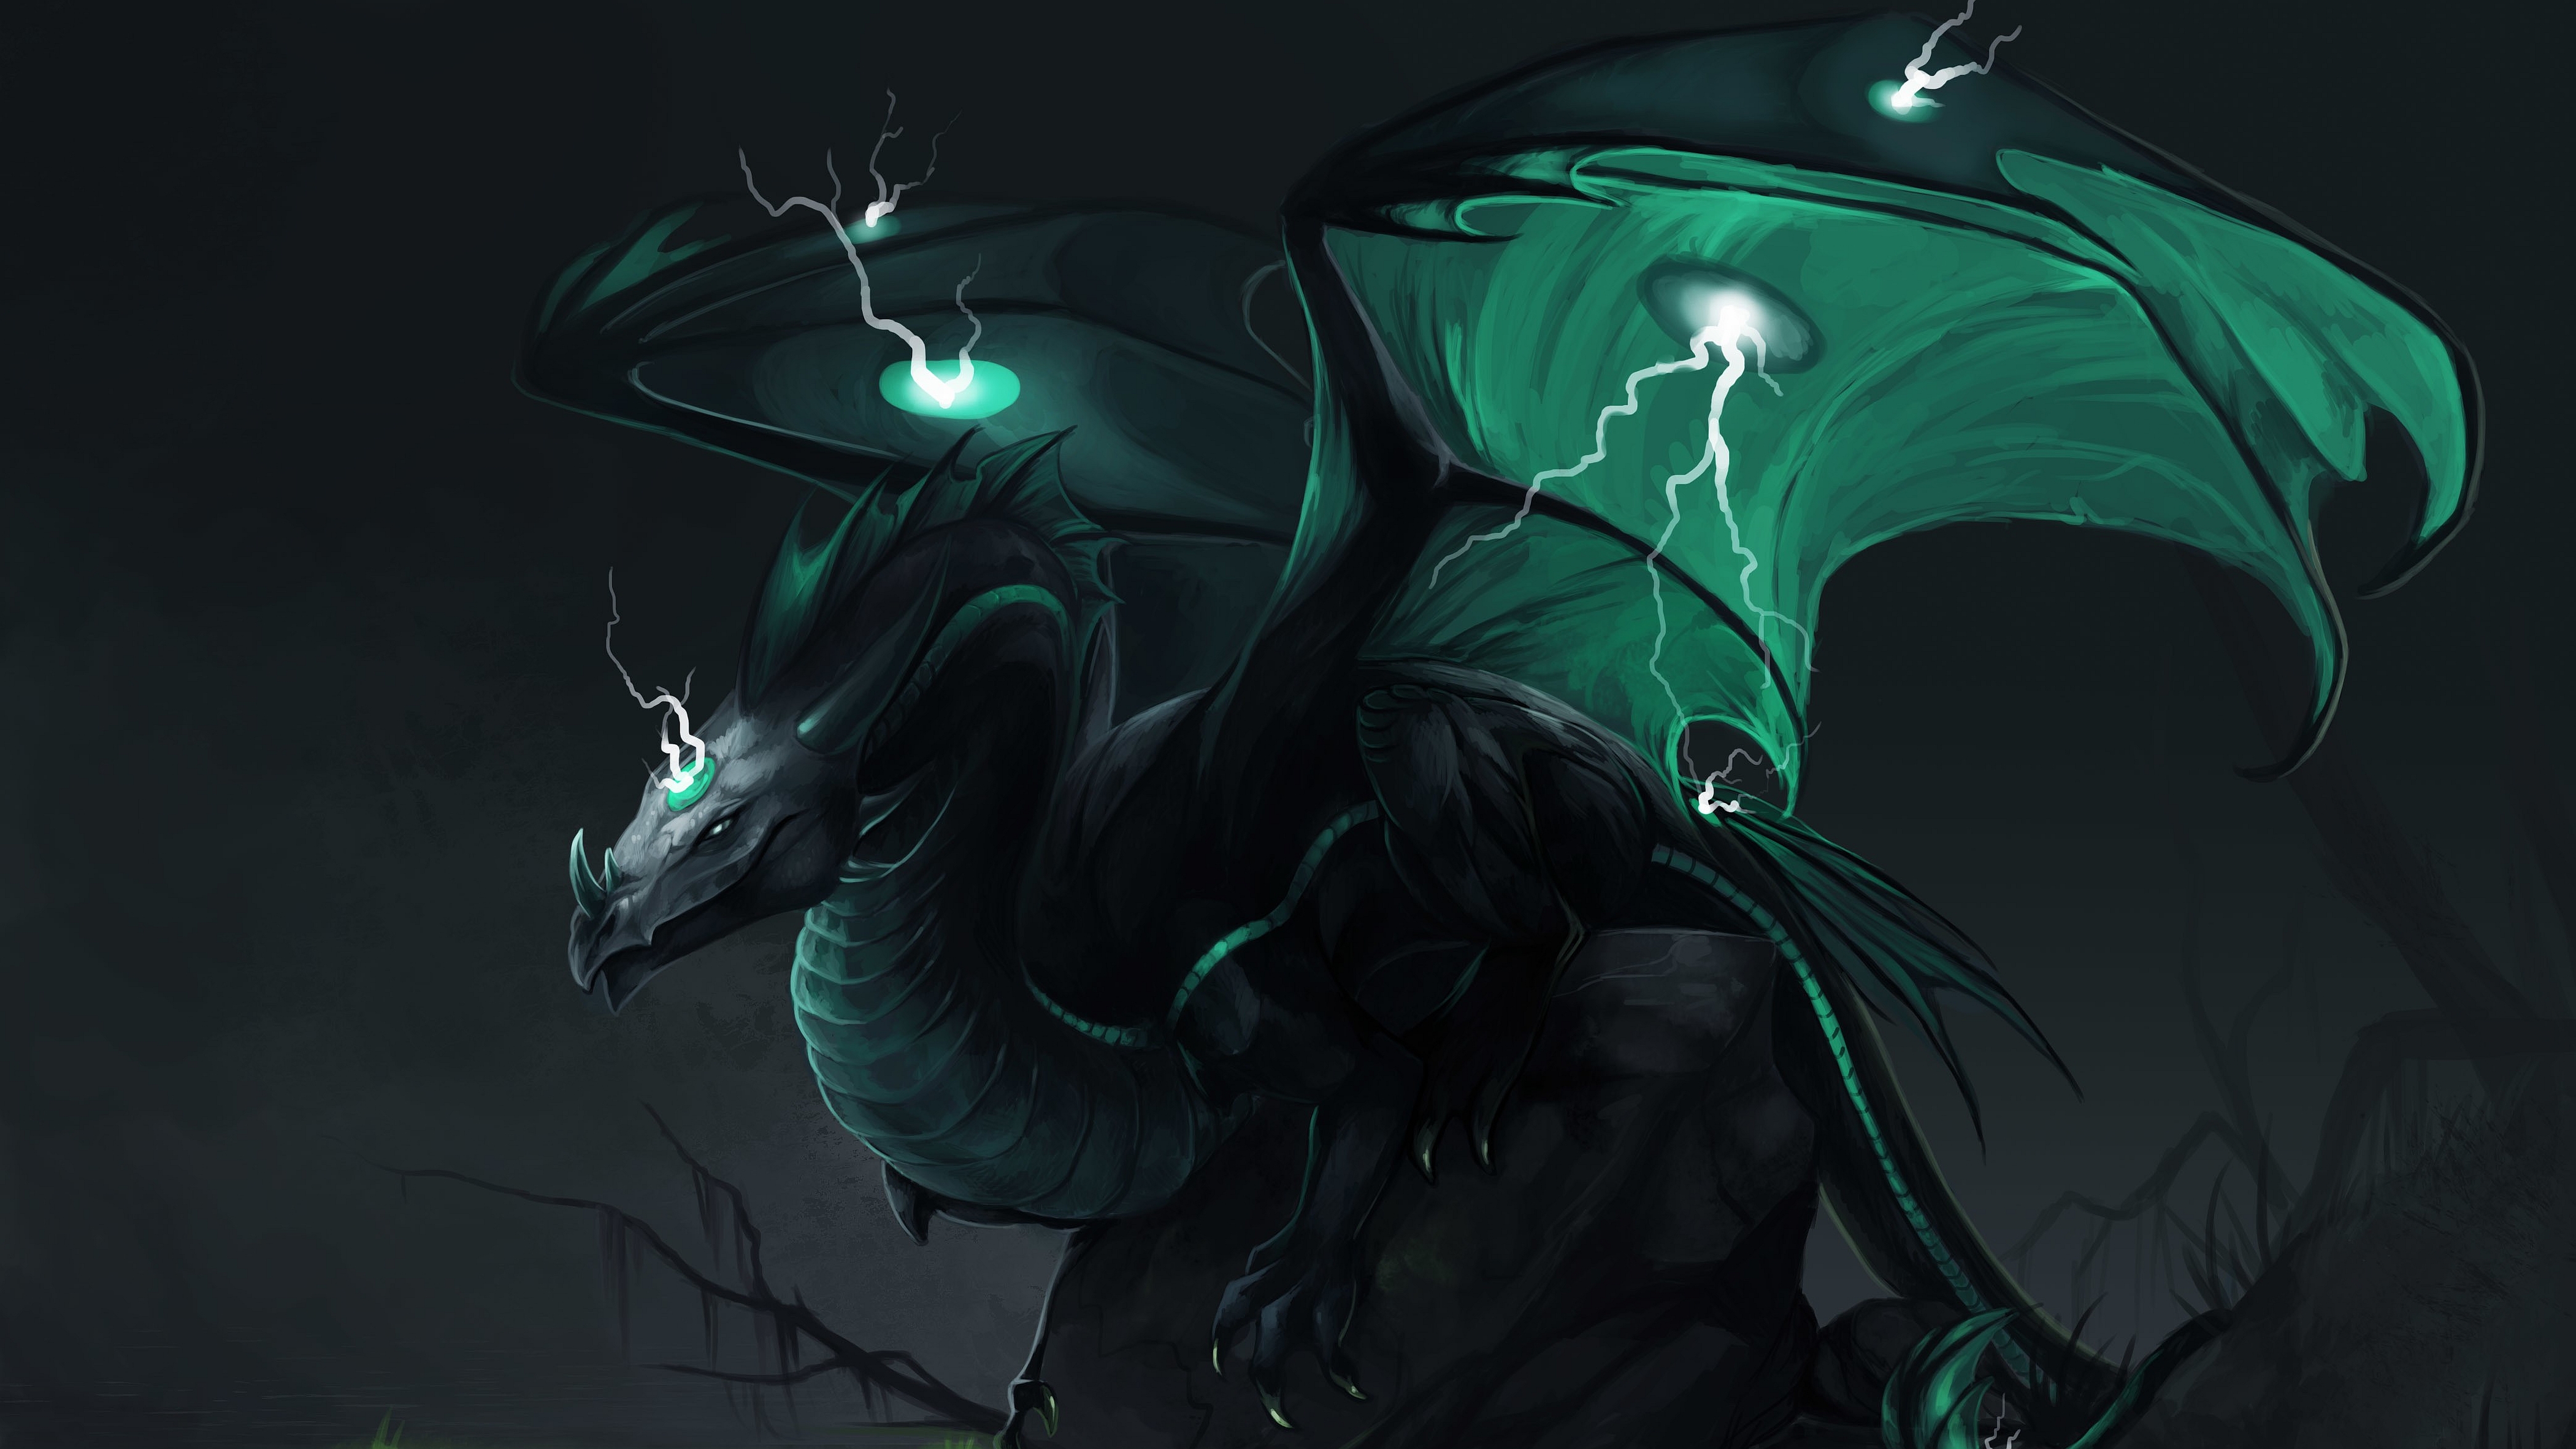 download green dragon fantasy hd wallpaper search more high definition